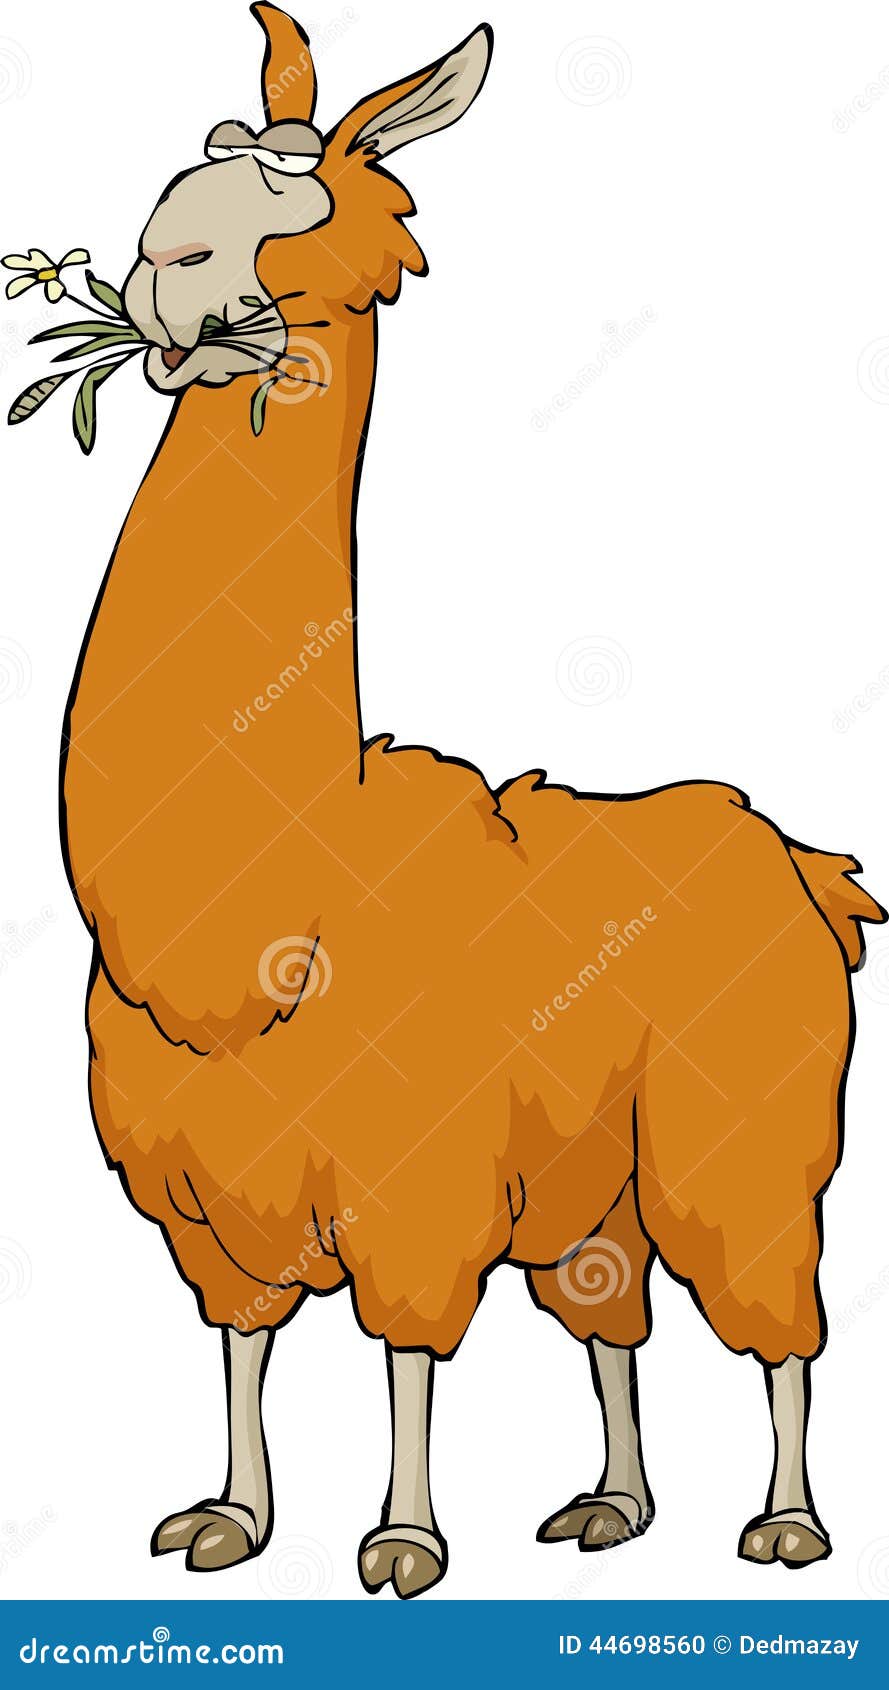 Llama chewing stock vector. Illustration of vector ...